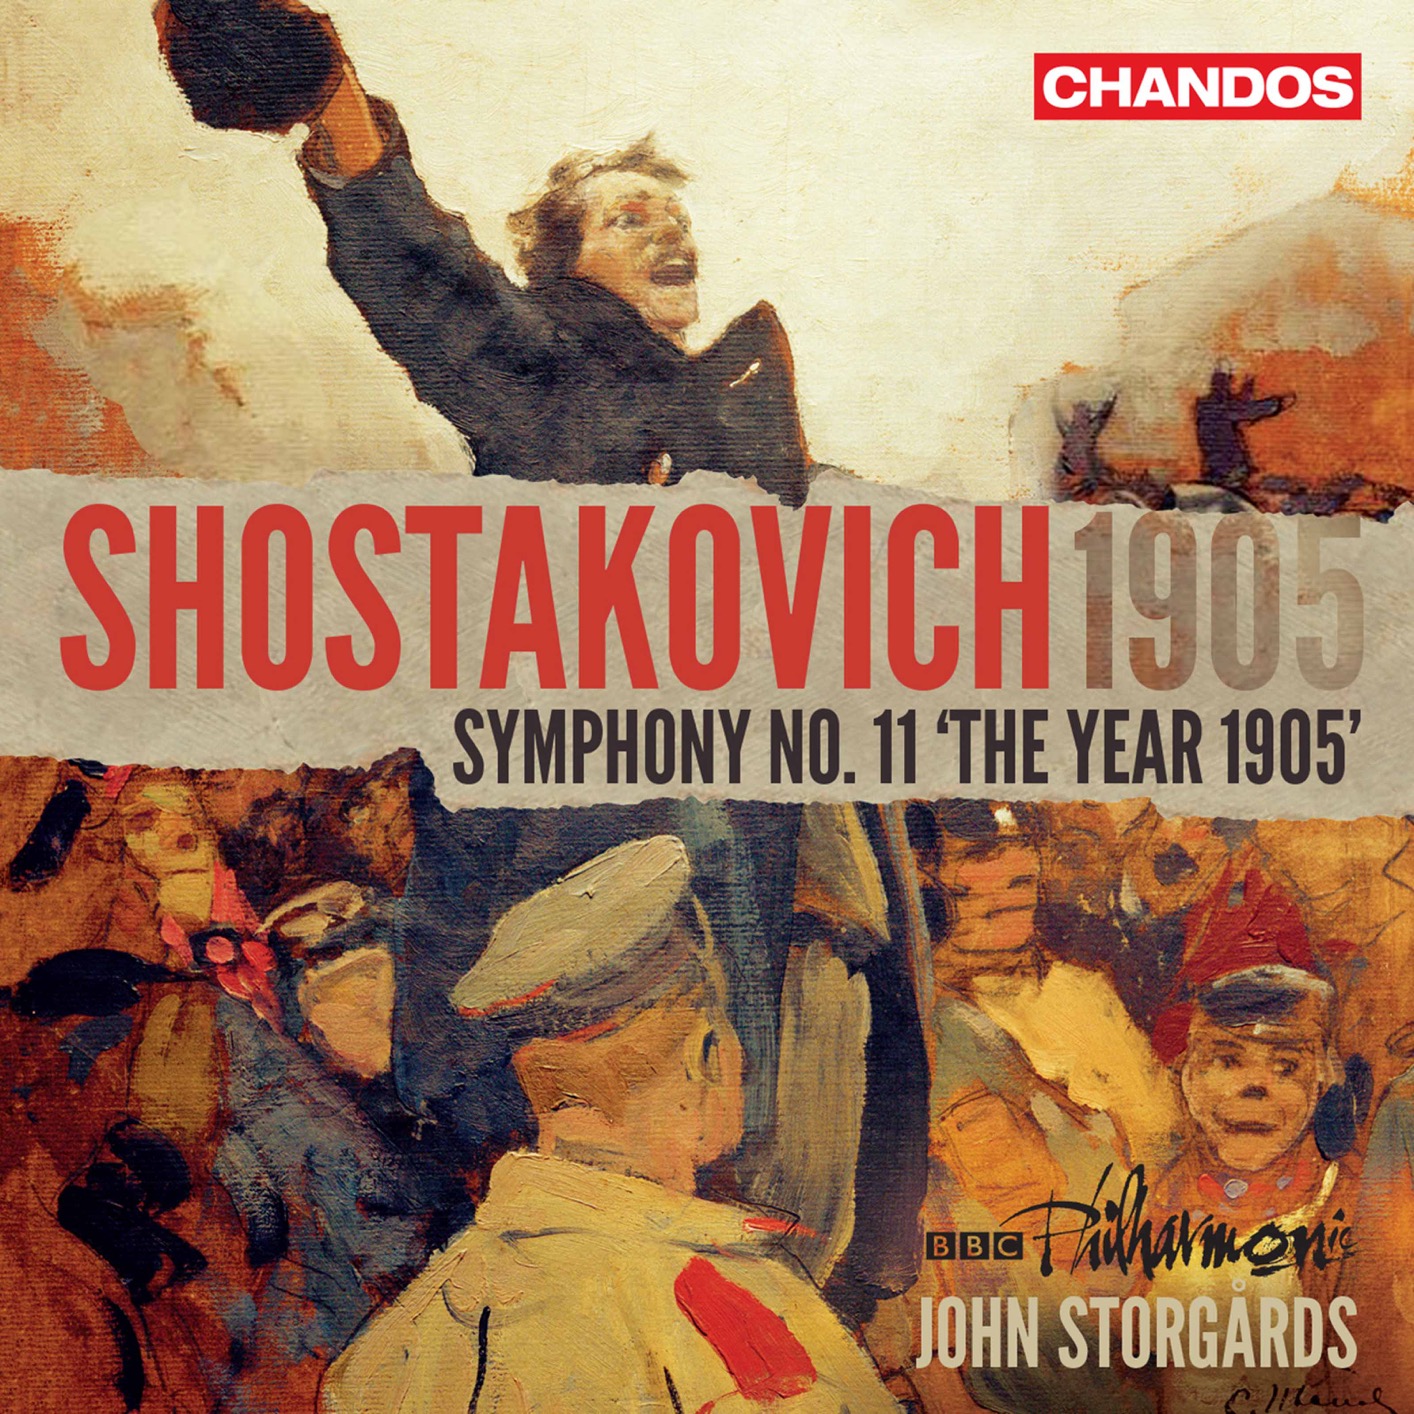 BBC Philharmonic Orchestra & John Storgards - Shostakovich: “The Year 1905” (2020) [FLAC 24bit/96kHz]